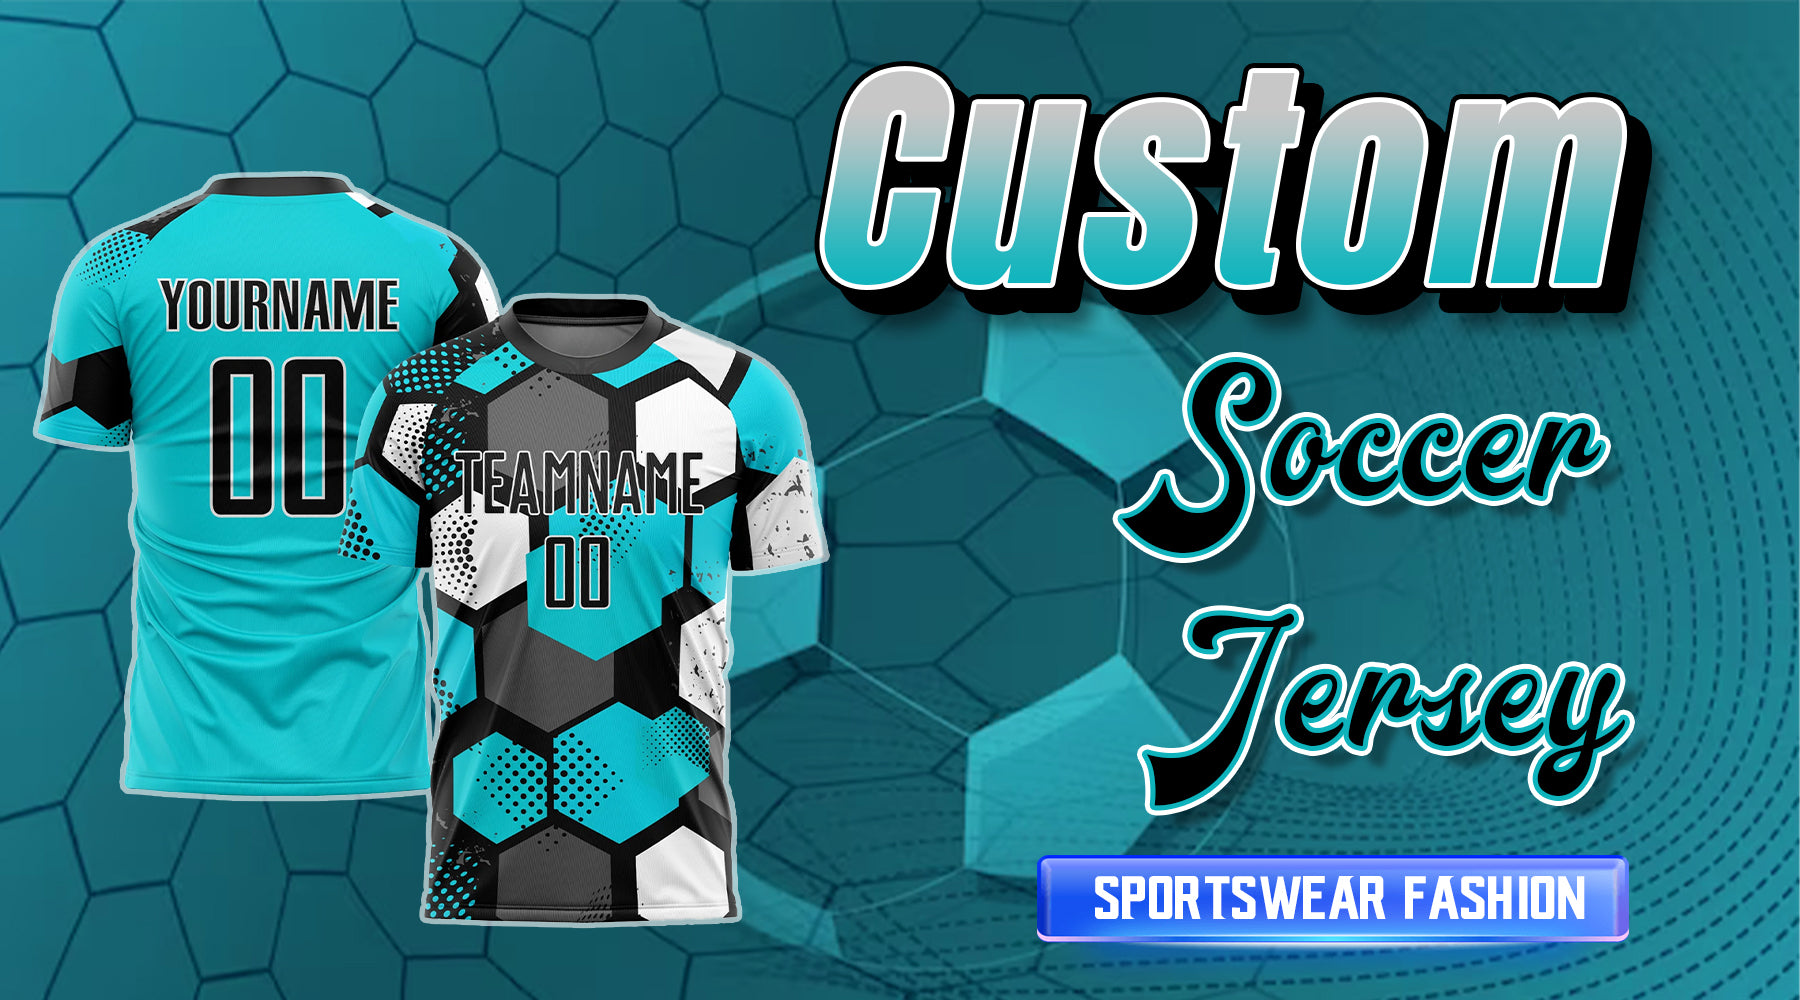 FANSIDEA Custom Black Royal-Light Blue Flame Sublimation Soccer Uniform Jersey Men's Size:S